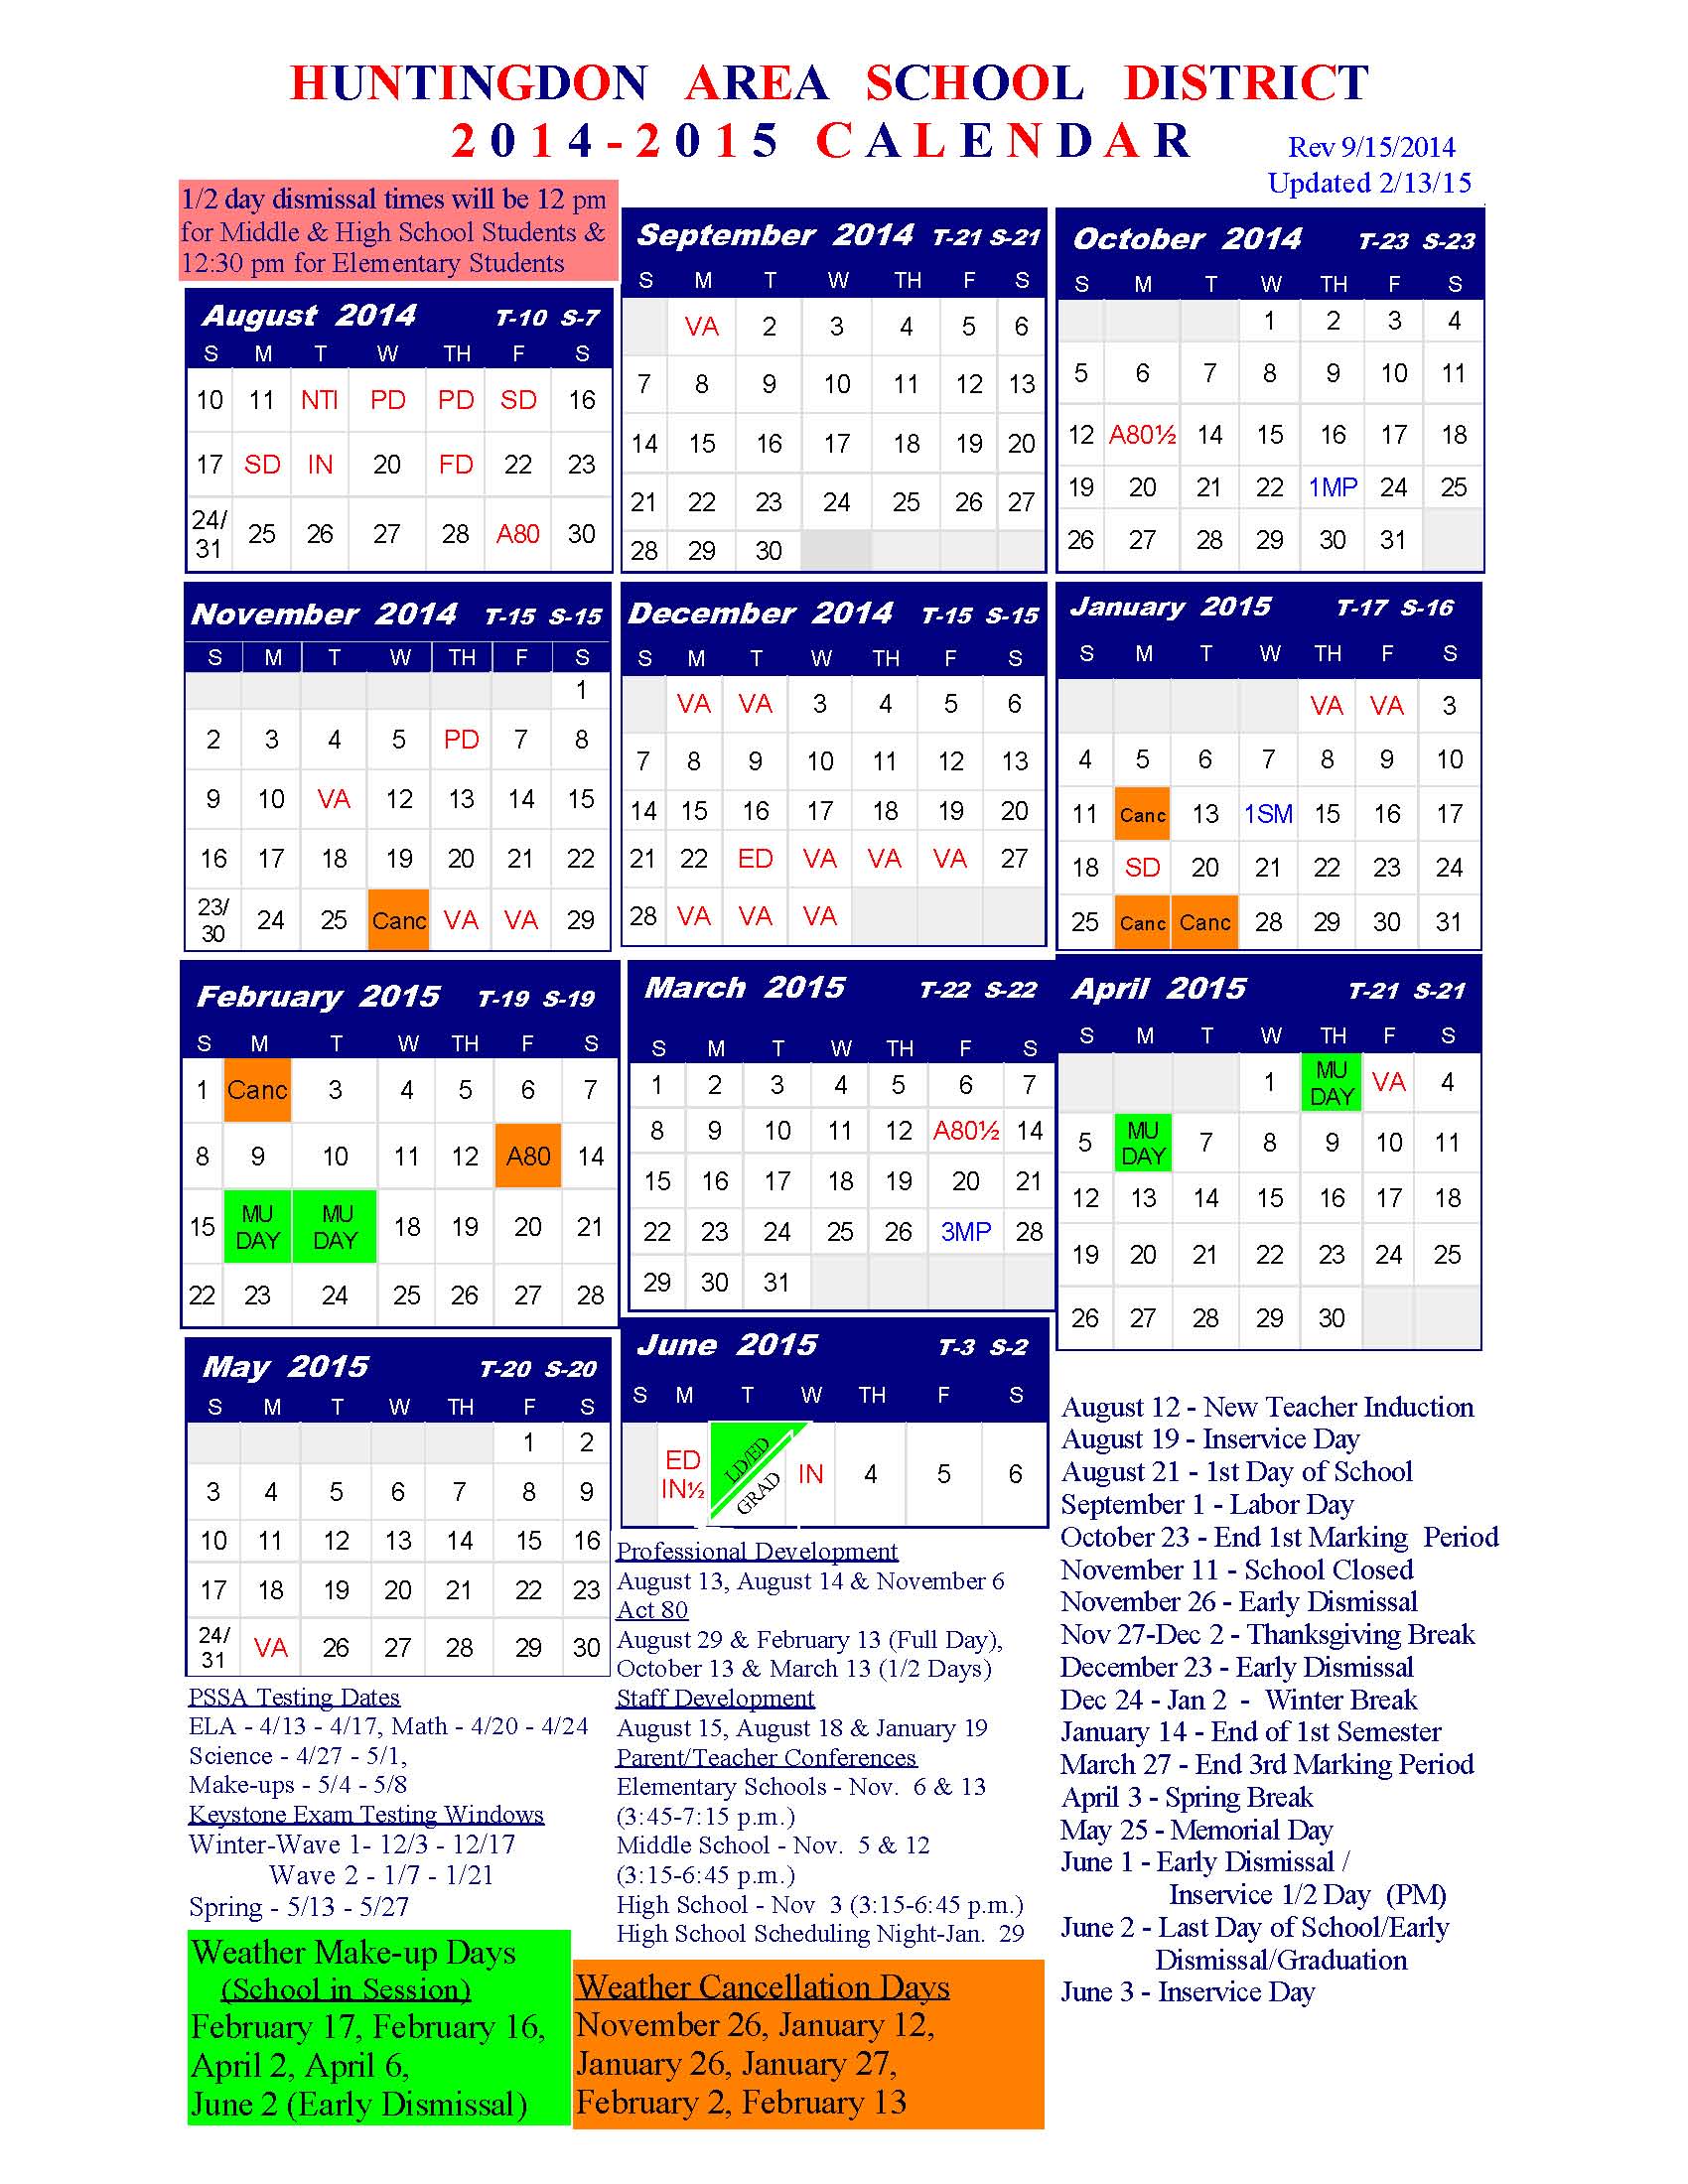 District Calendar Huntingdon Area School District